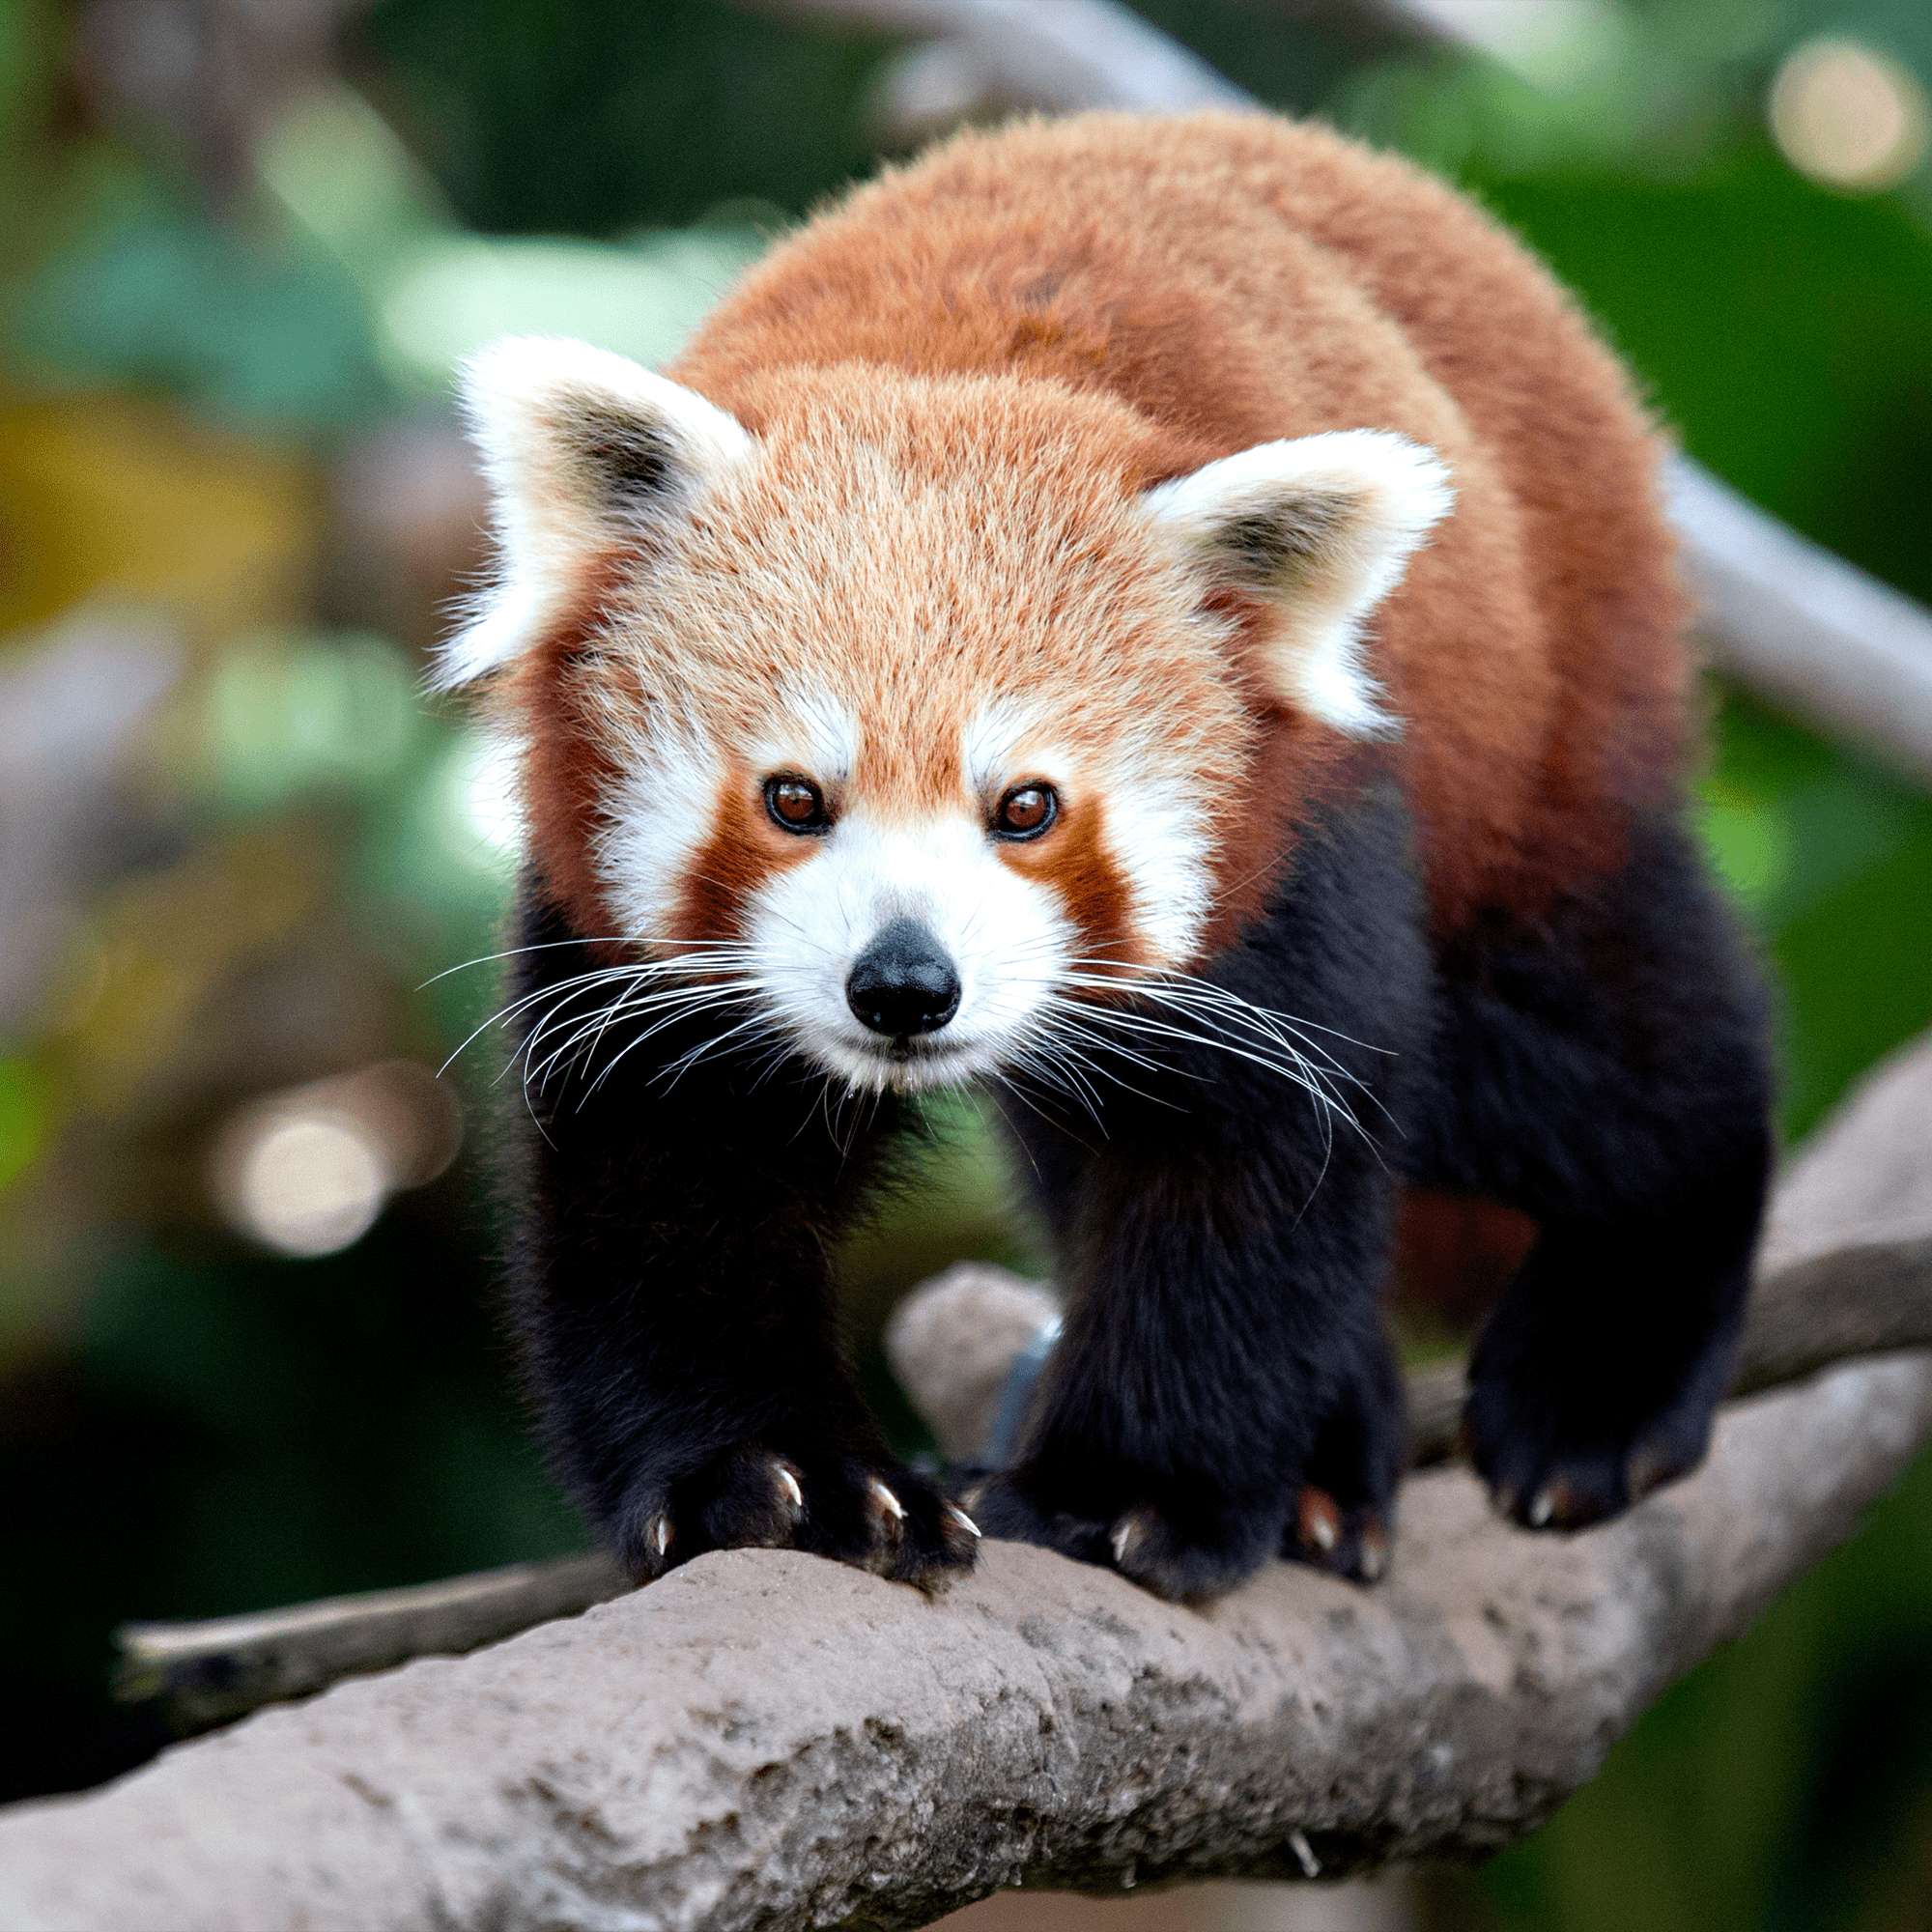 Peluche panda roux -  France